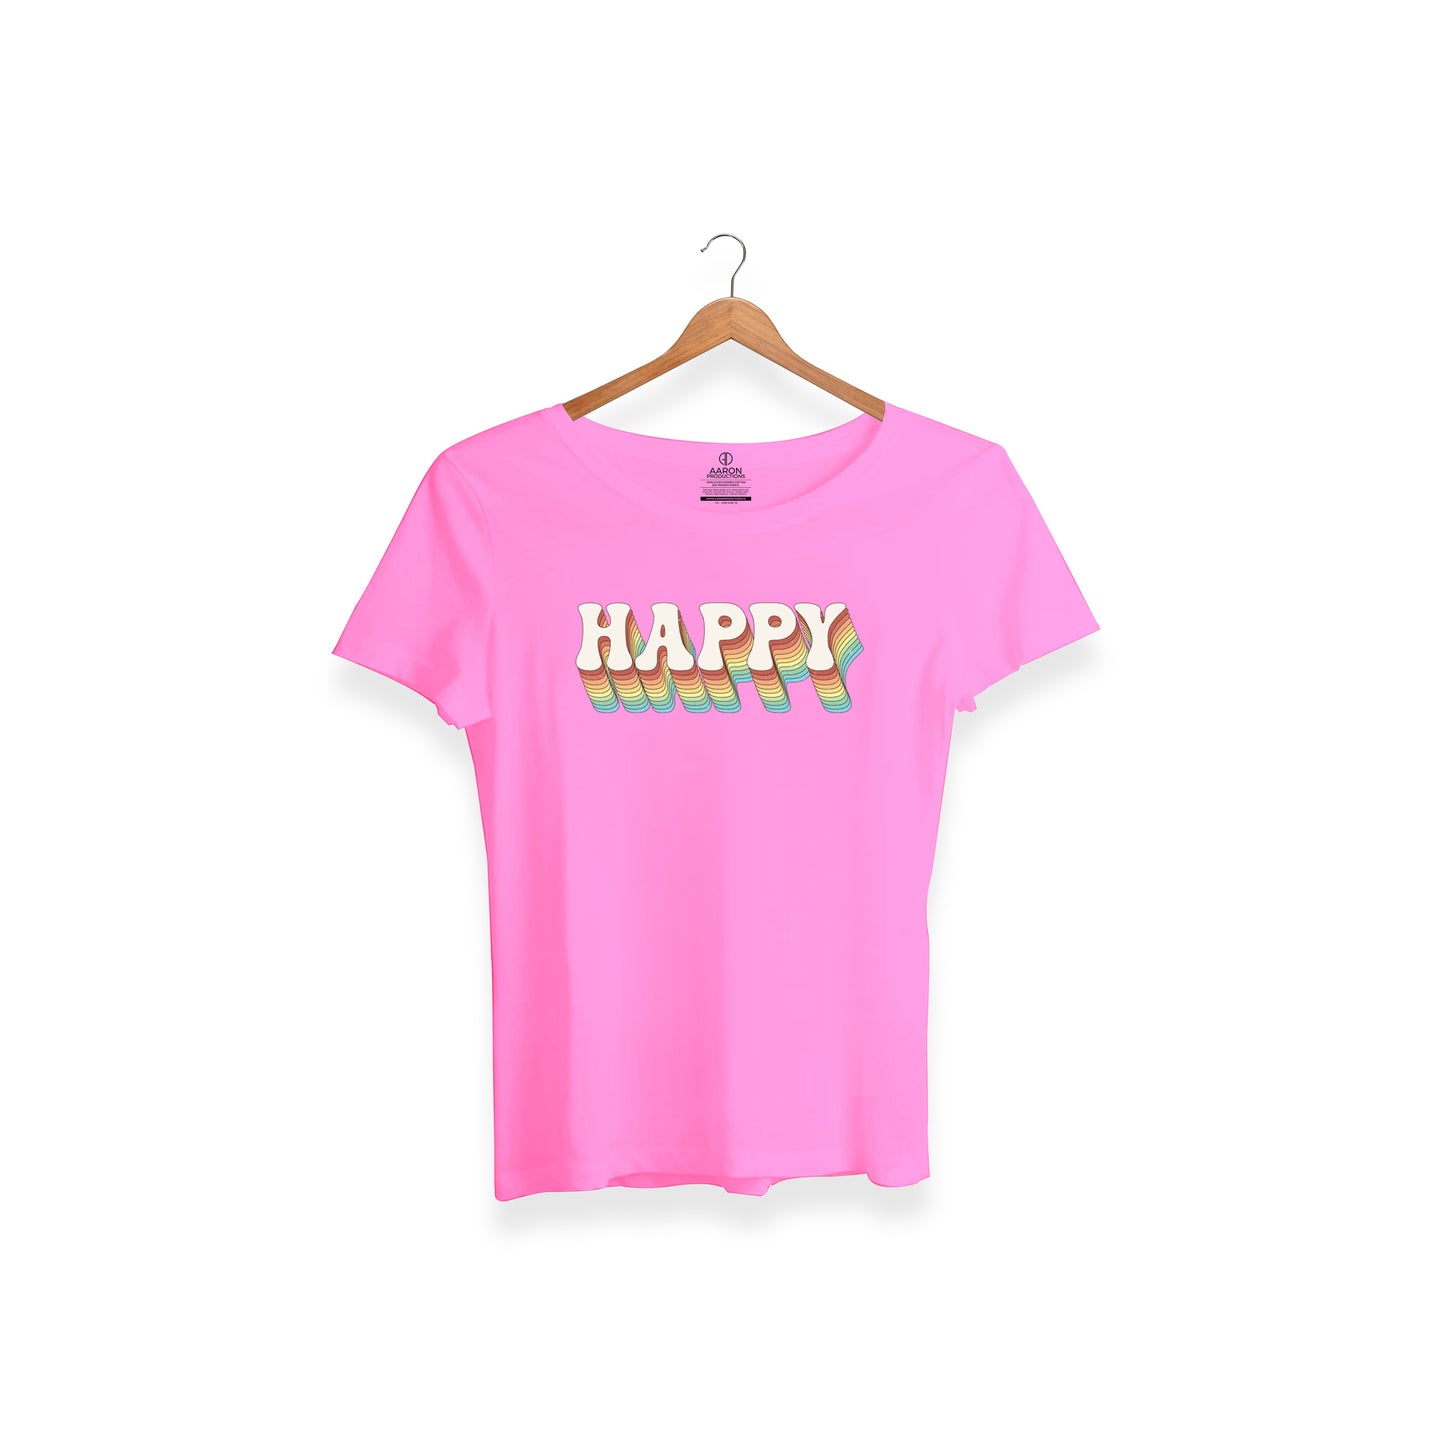 Happy - Girls tshirt